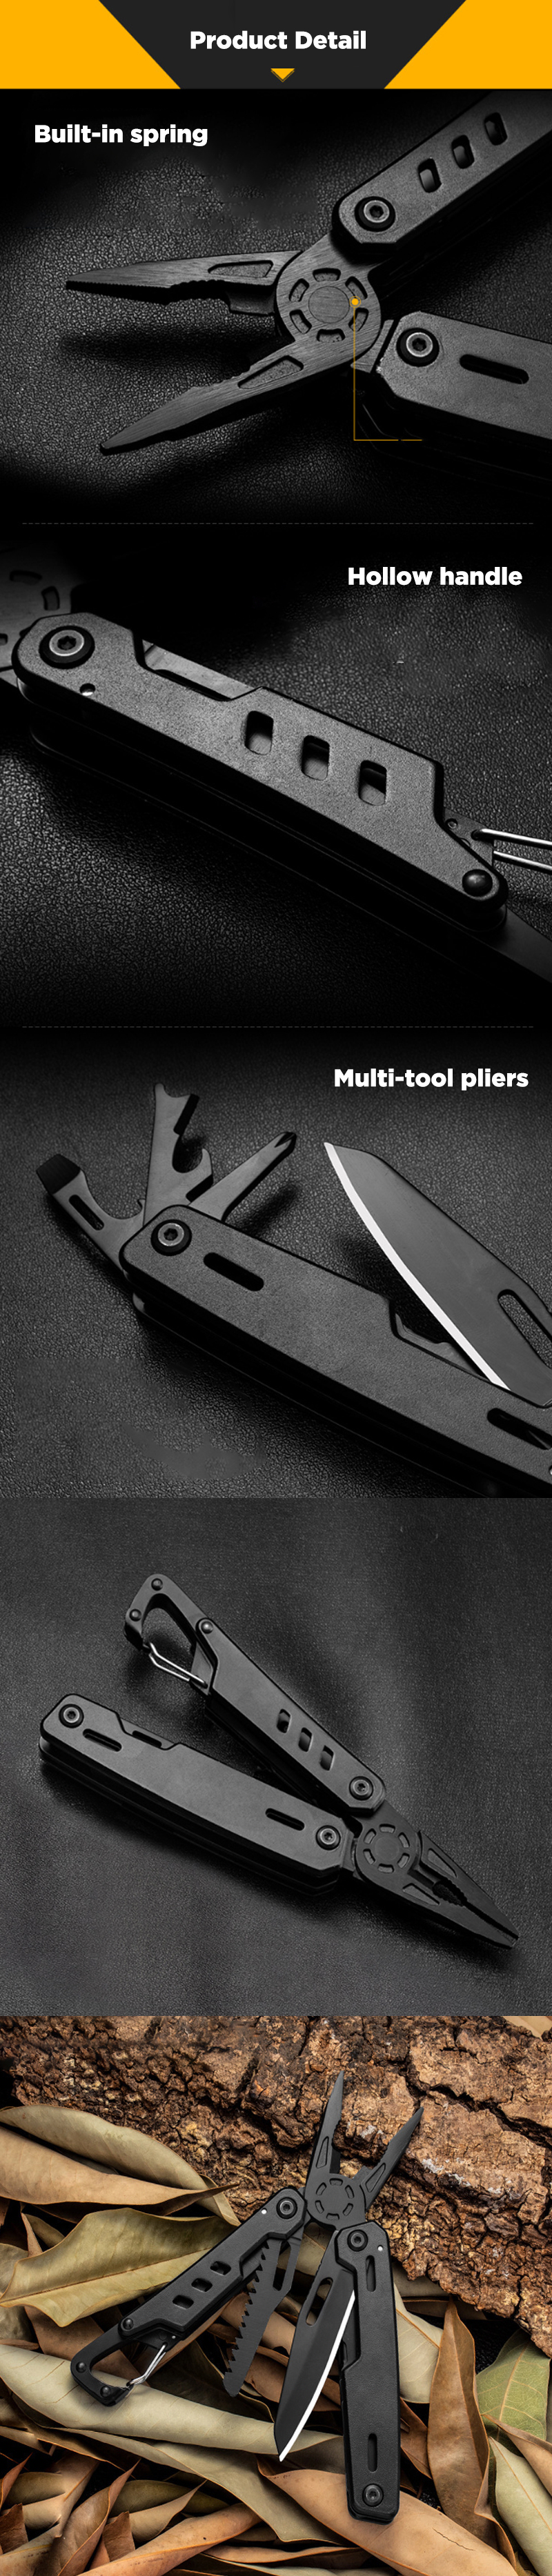 VOLKEN-11-in-1-Multifunctional-Pliers-Portable-Outdoor-Hikibg-EDC-Folding-Knife-Tool-1598634-2